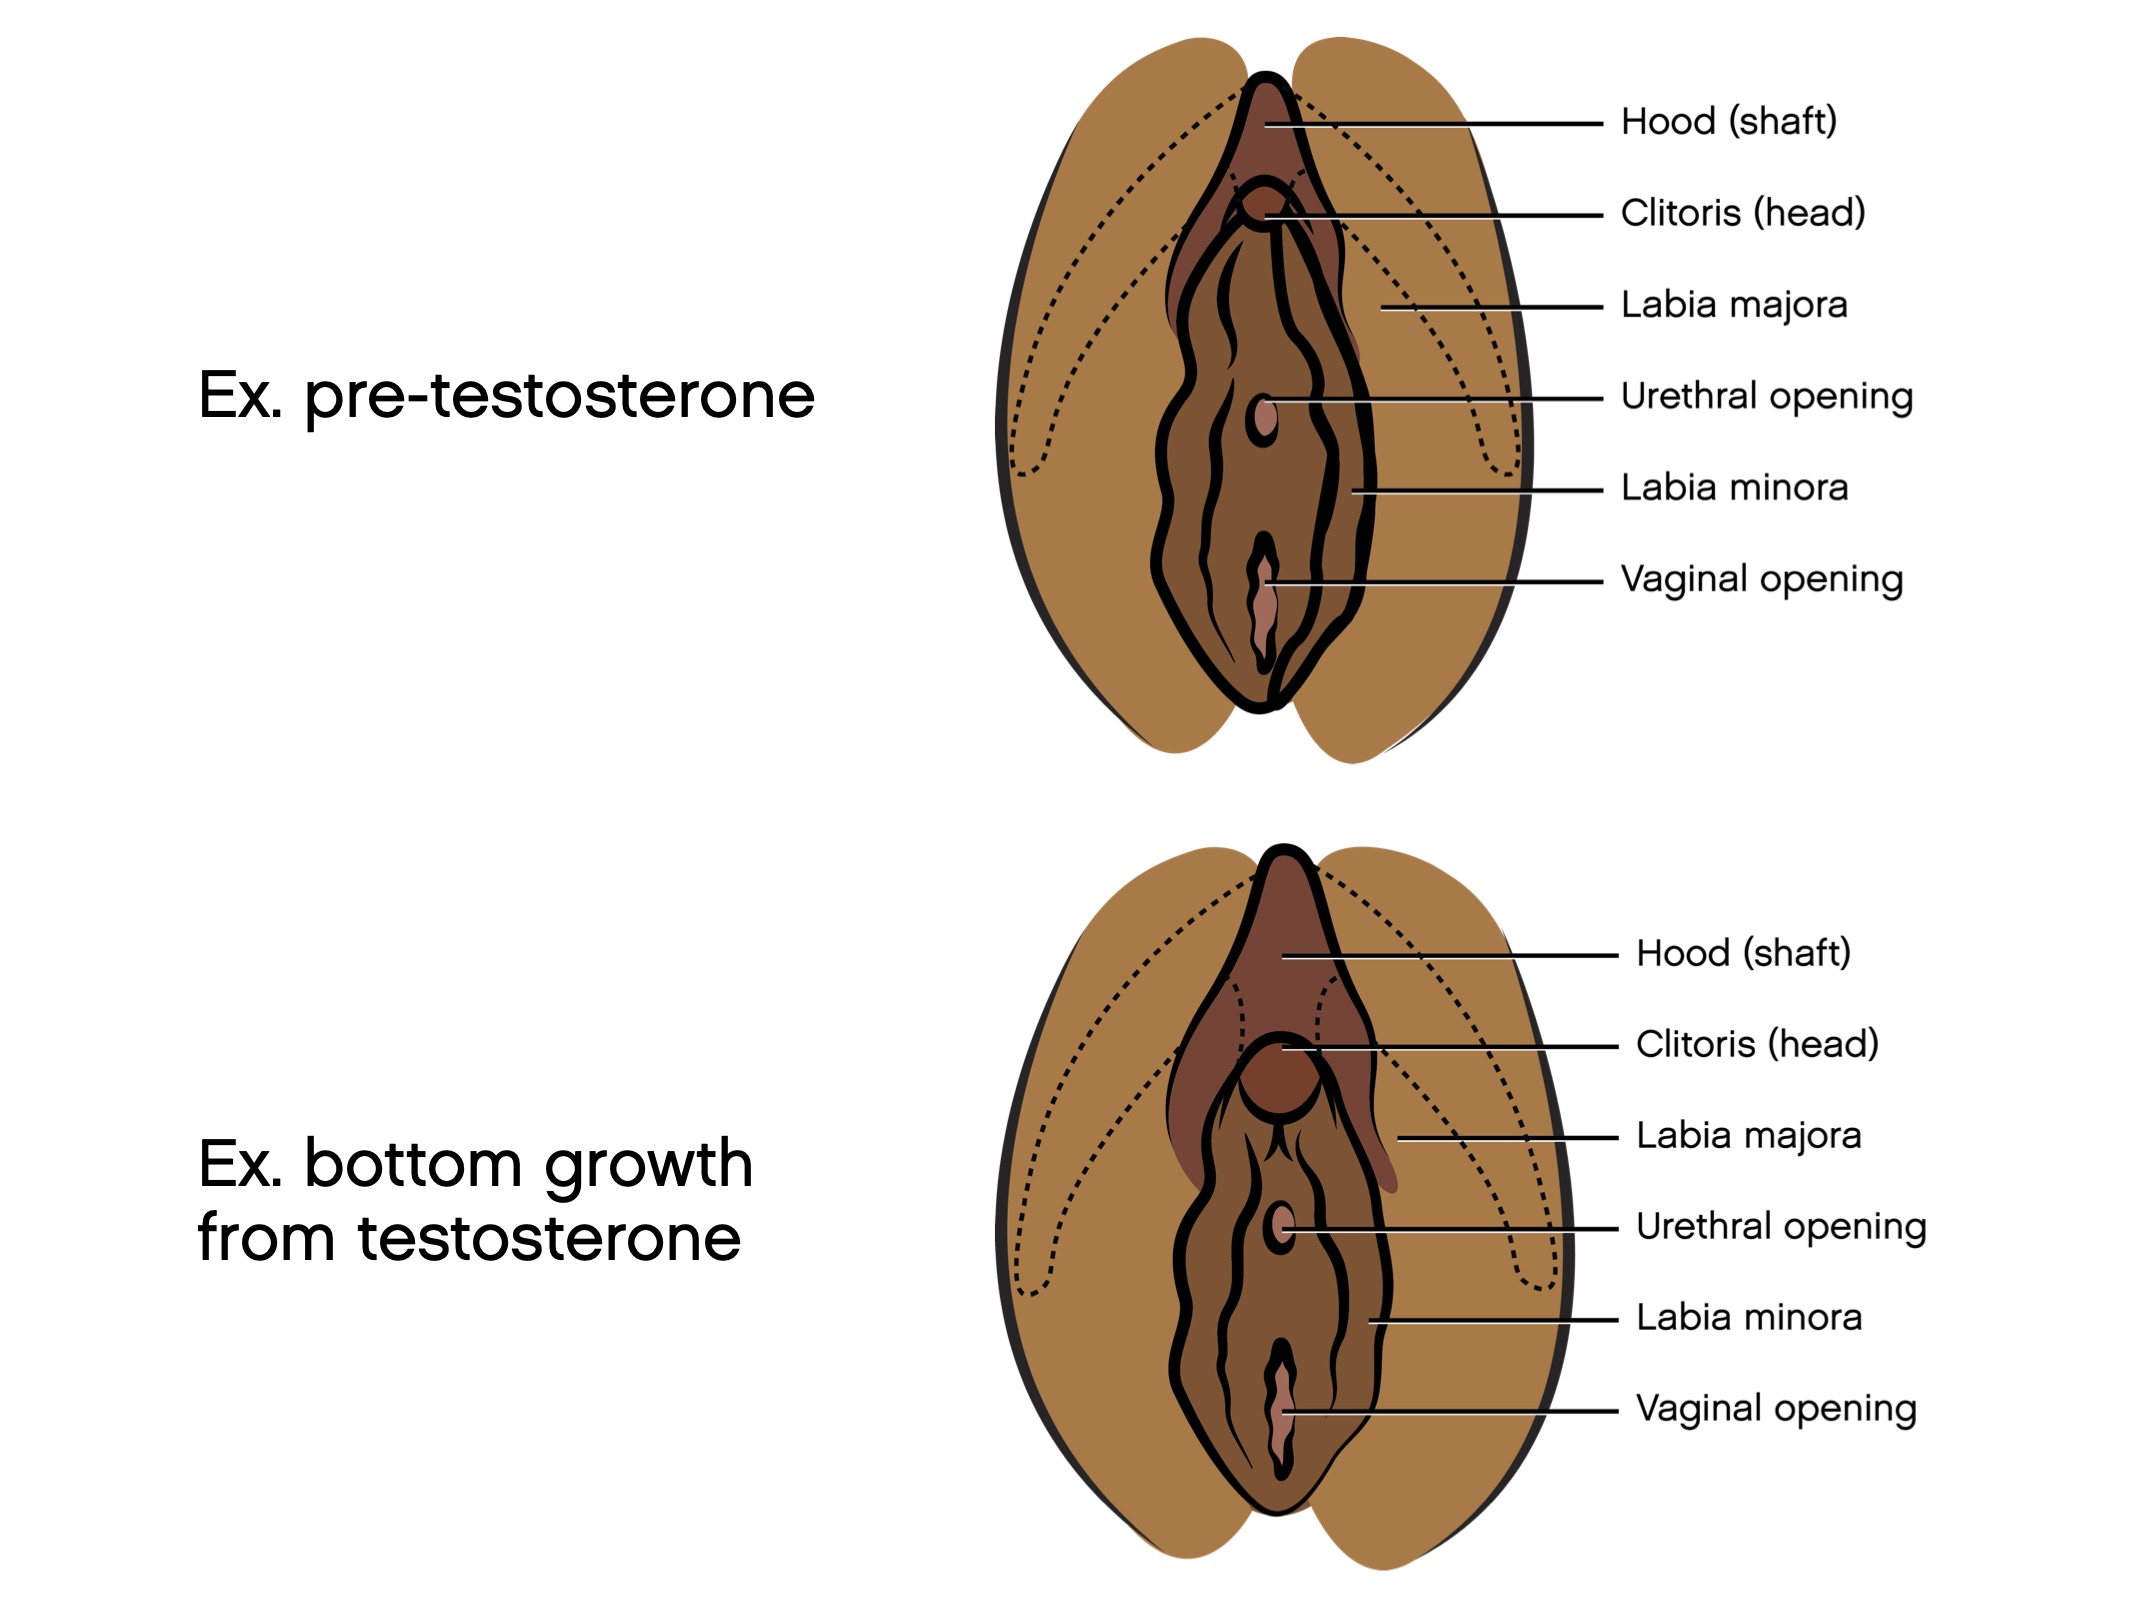 Bottom growth on testosterone